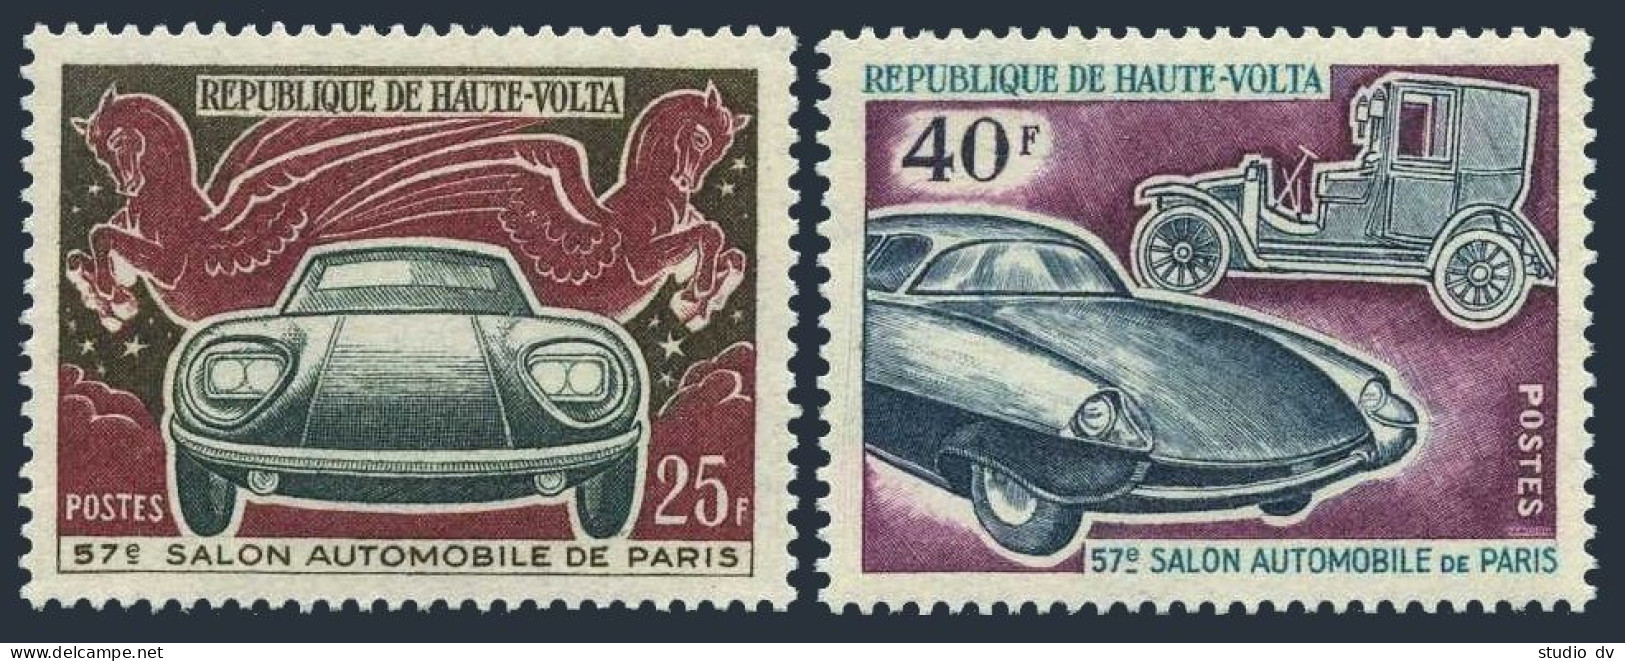 Burkina Faso 231-232, MNH. Michel 310-311. Old, New Citroen Cars. 1970. - Burkina Faso (1984-...)